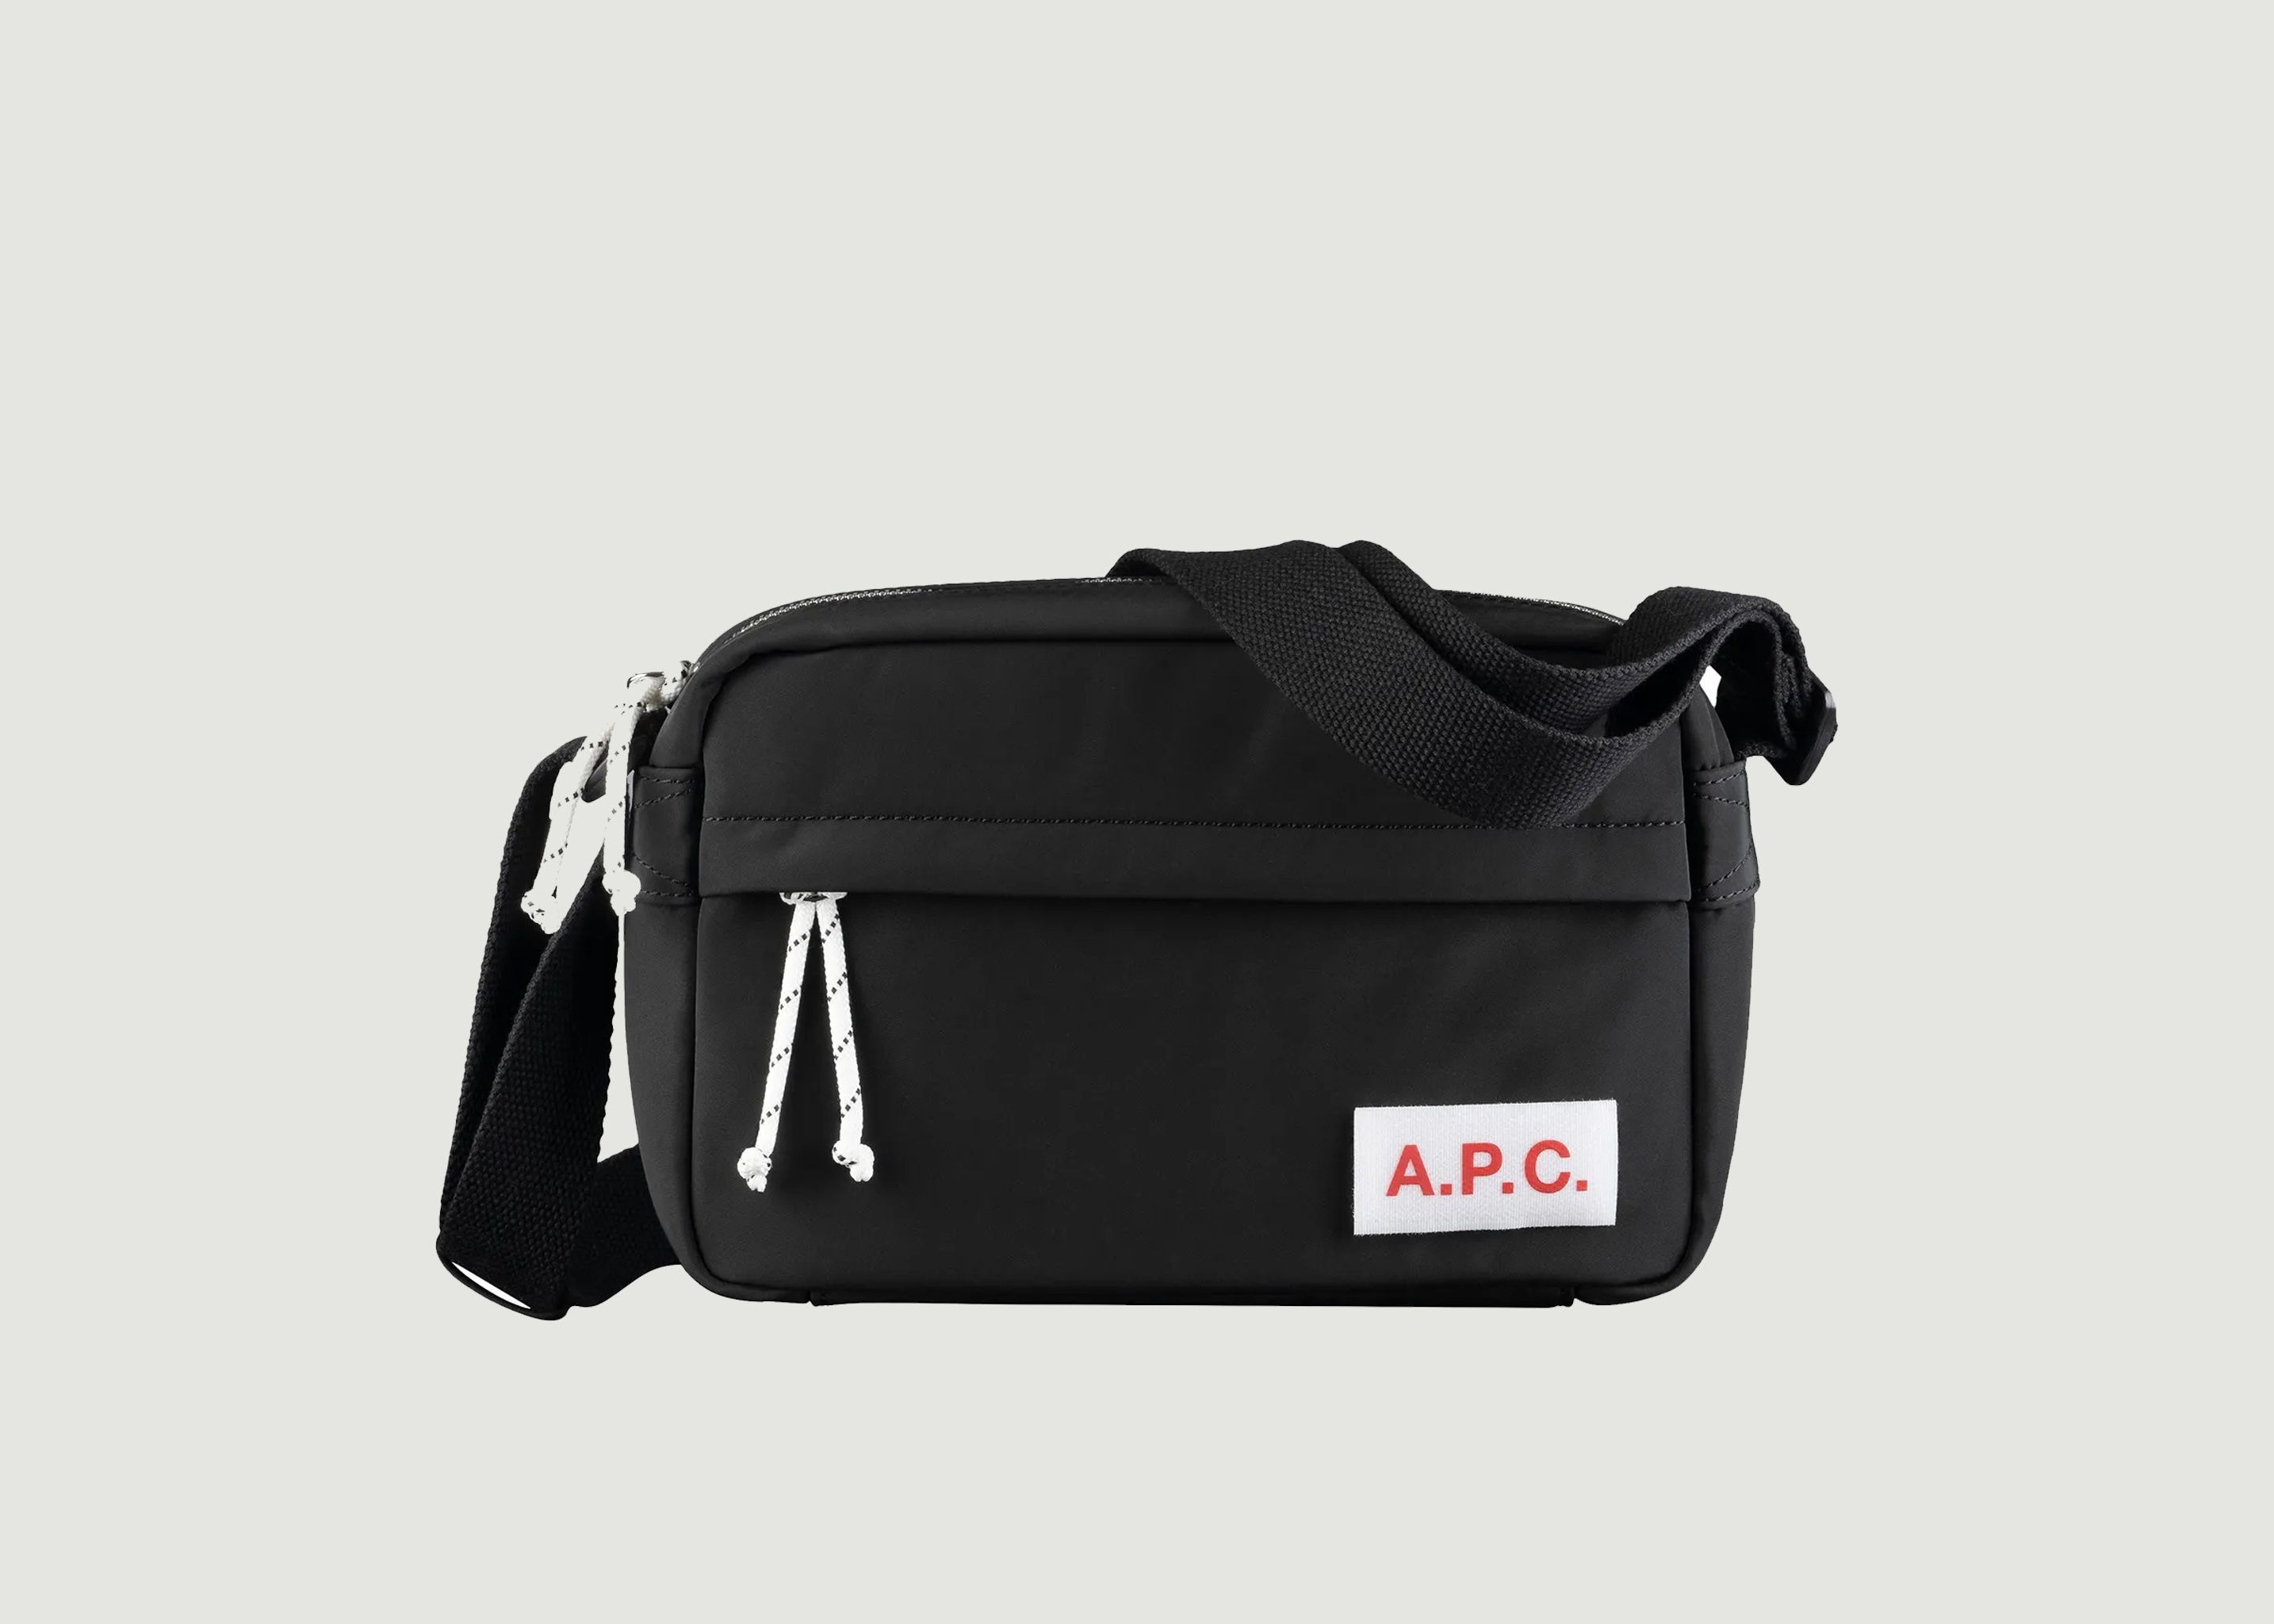 Camera protection bag - A.P.C.